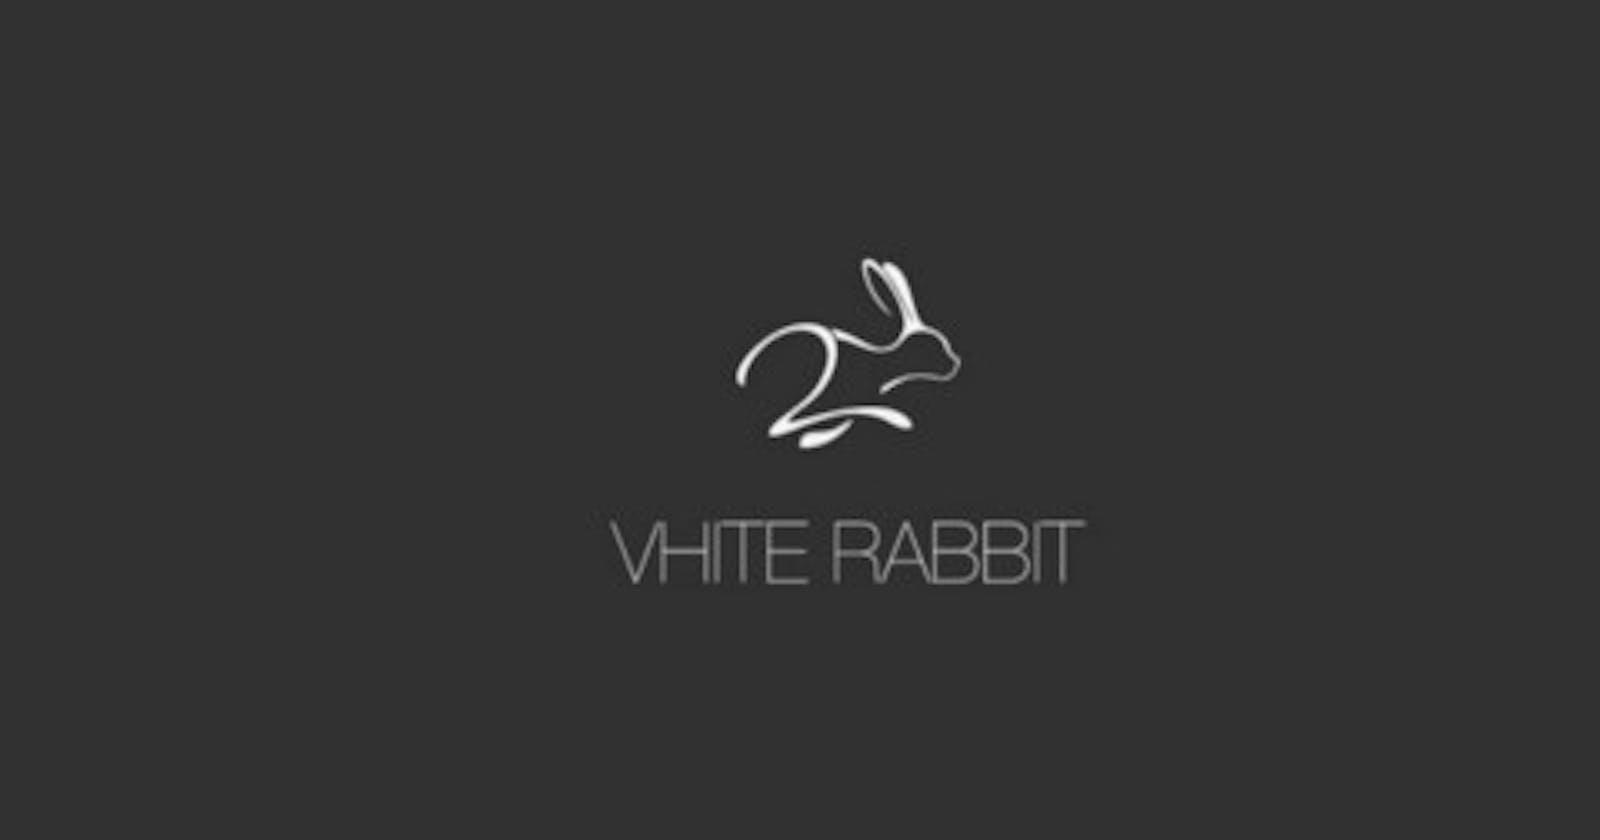 echo3D featured on Vhite Rabbit